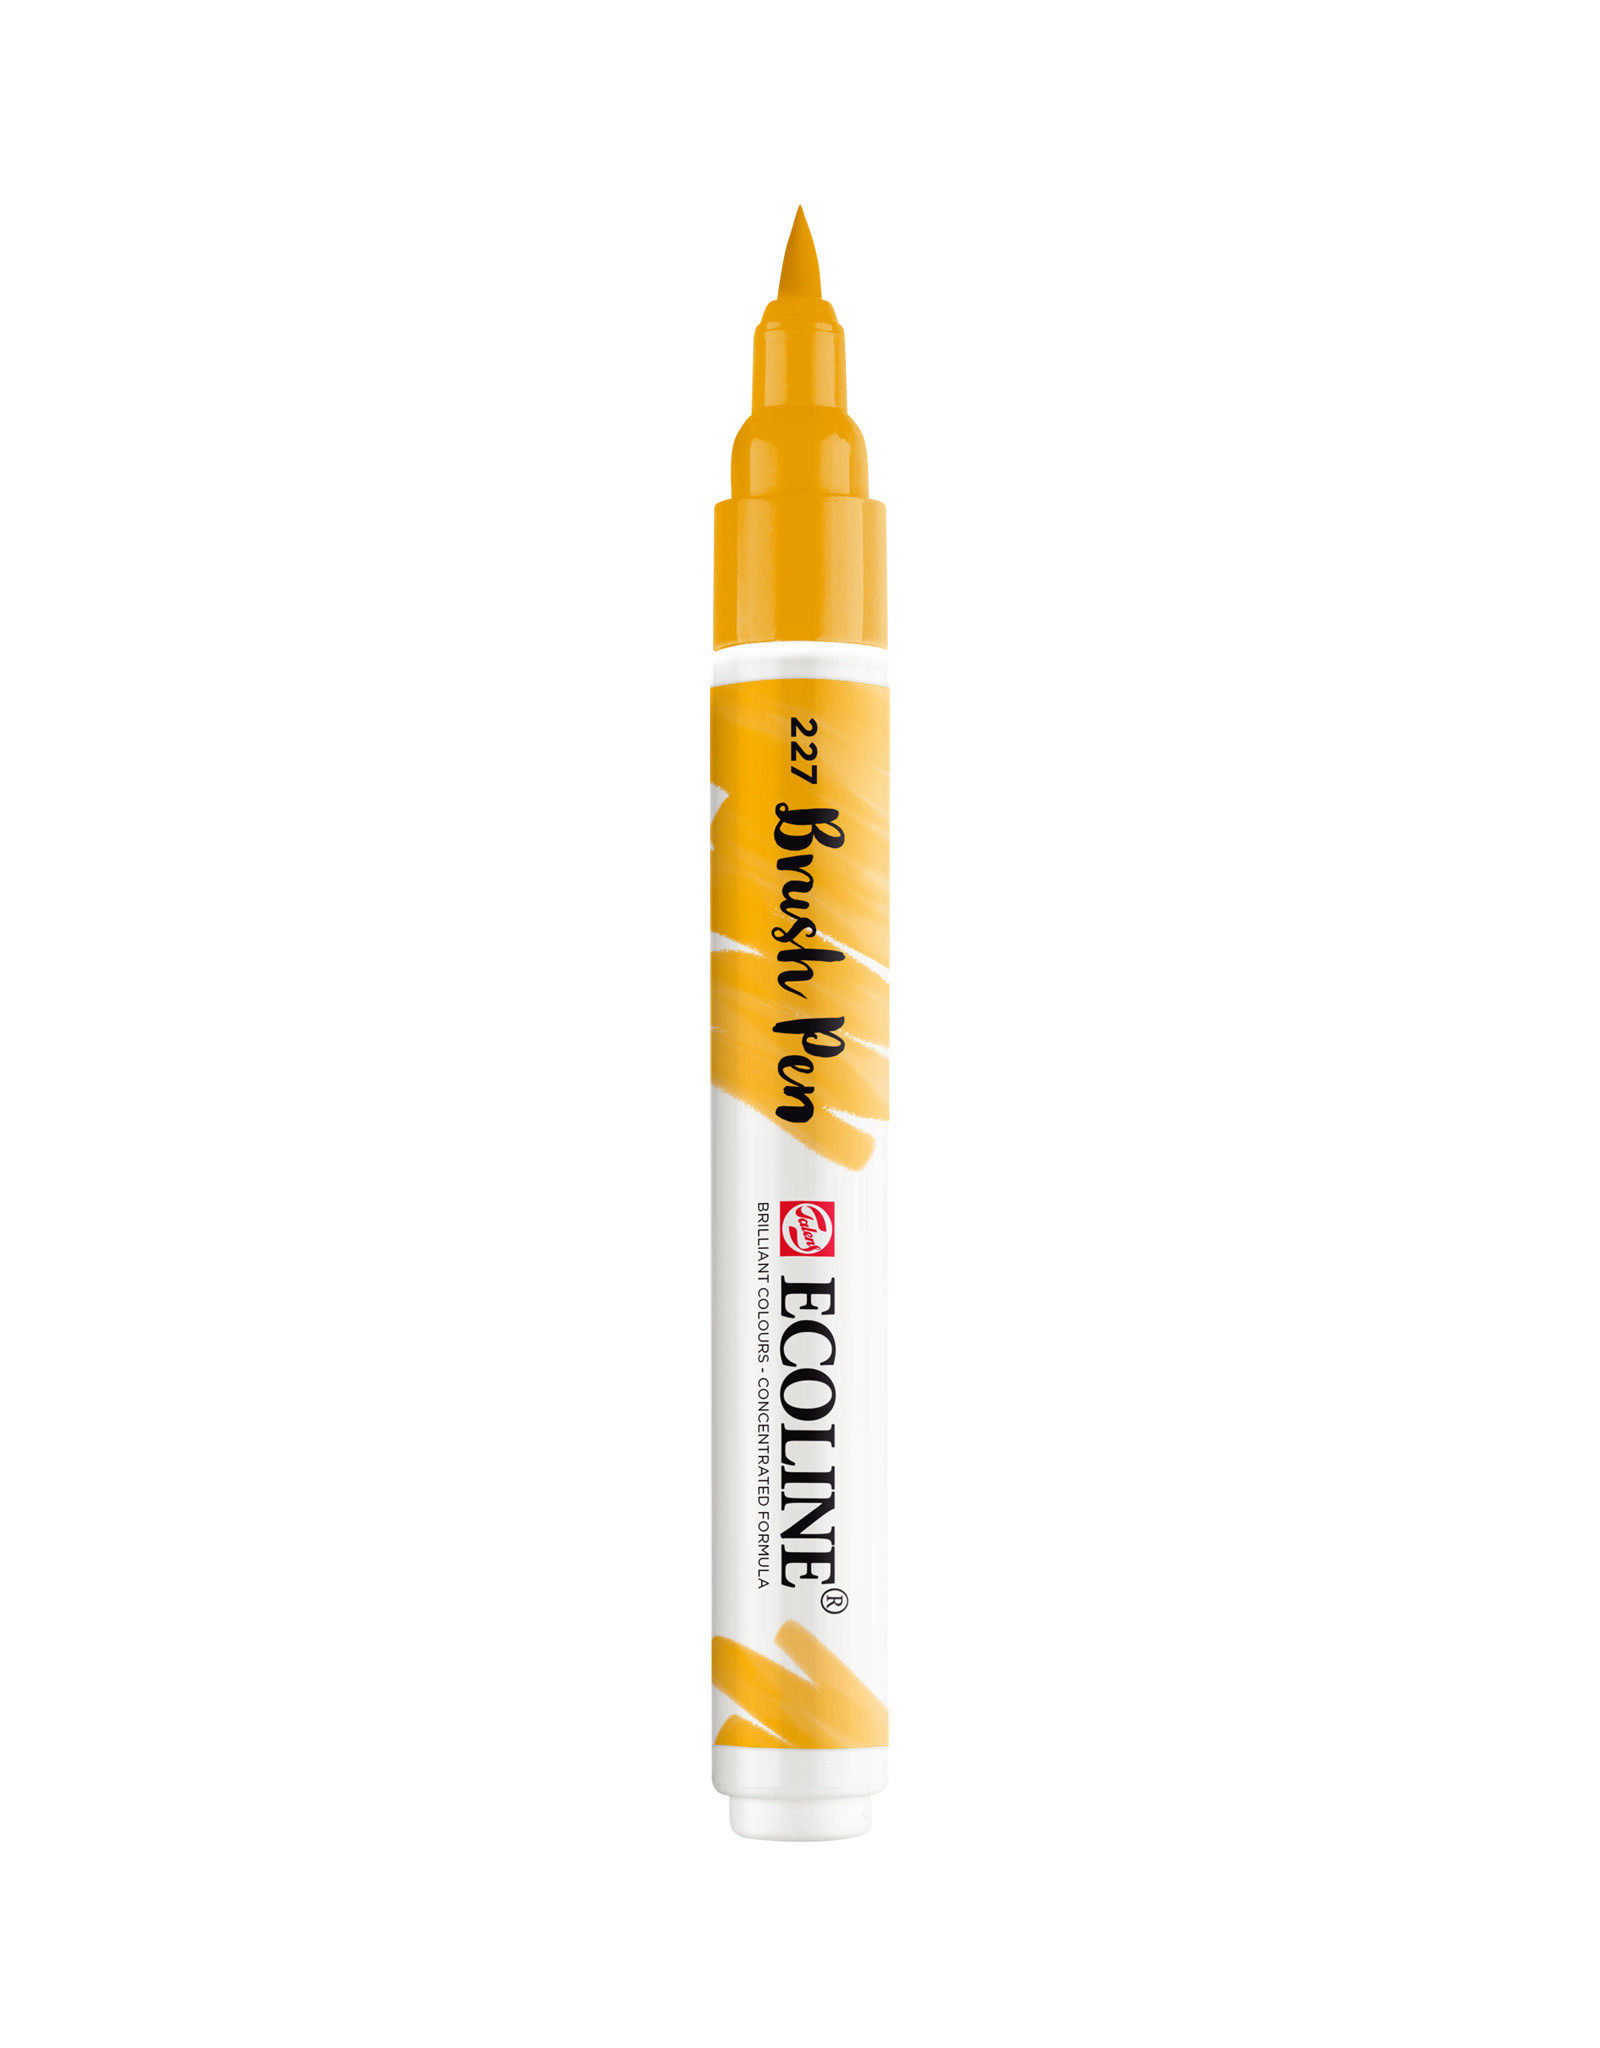 Royal Talens Ecoline Watercolour Brush Pen, Yellow Ochre